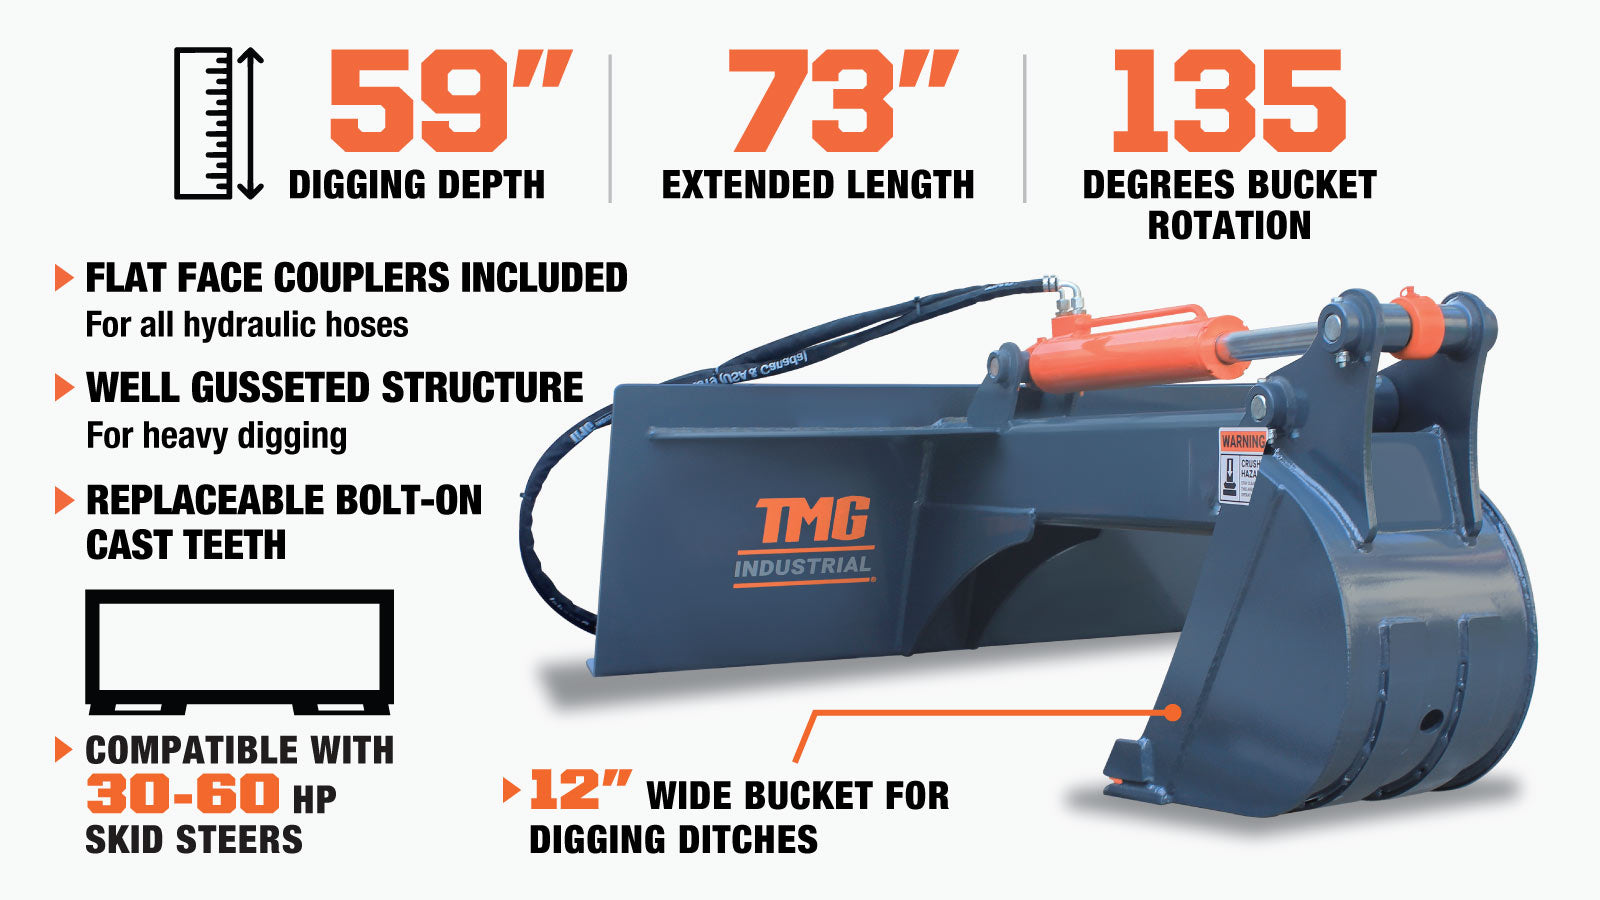 TMG Industrial Skid Steer Backhoe Attachment, 12” Bucket Included, 30-60 HP Carriers, 59” Digging Depth, TMG-SBH45-description-image